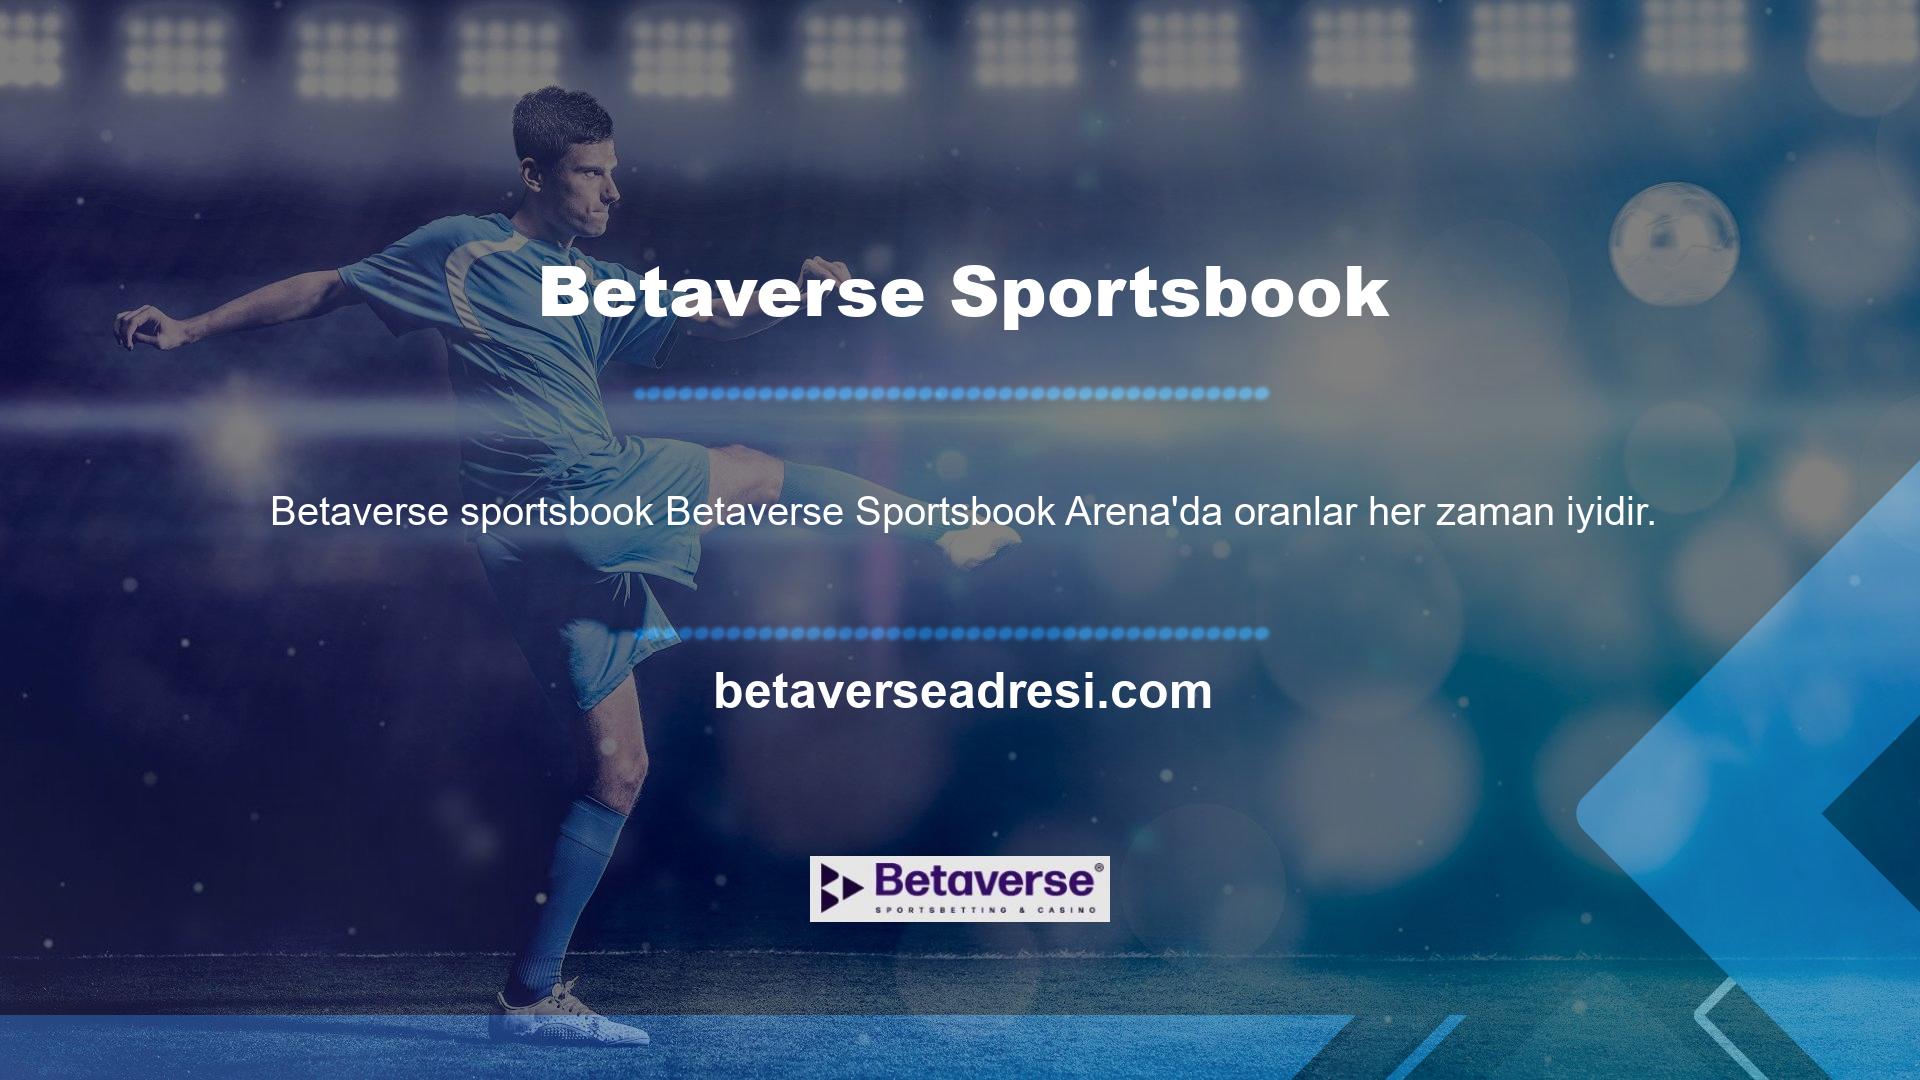 Betaverse Sportsbook